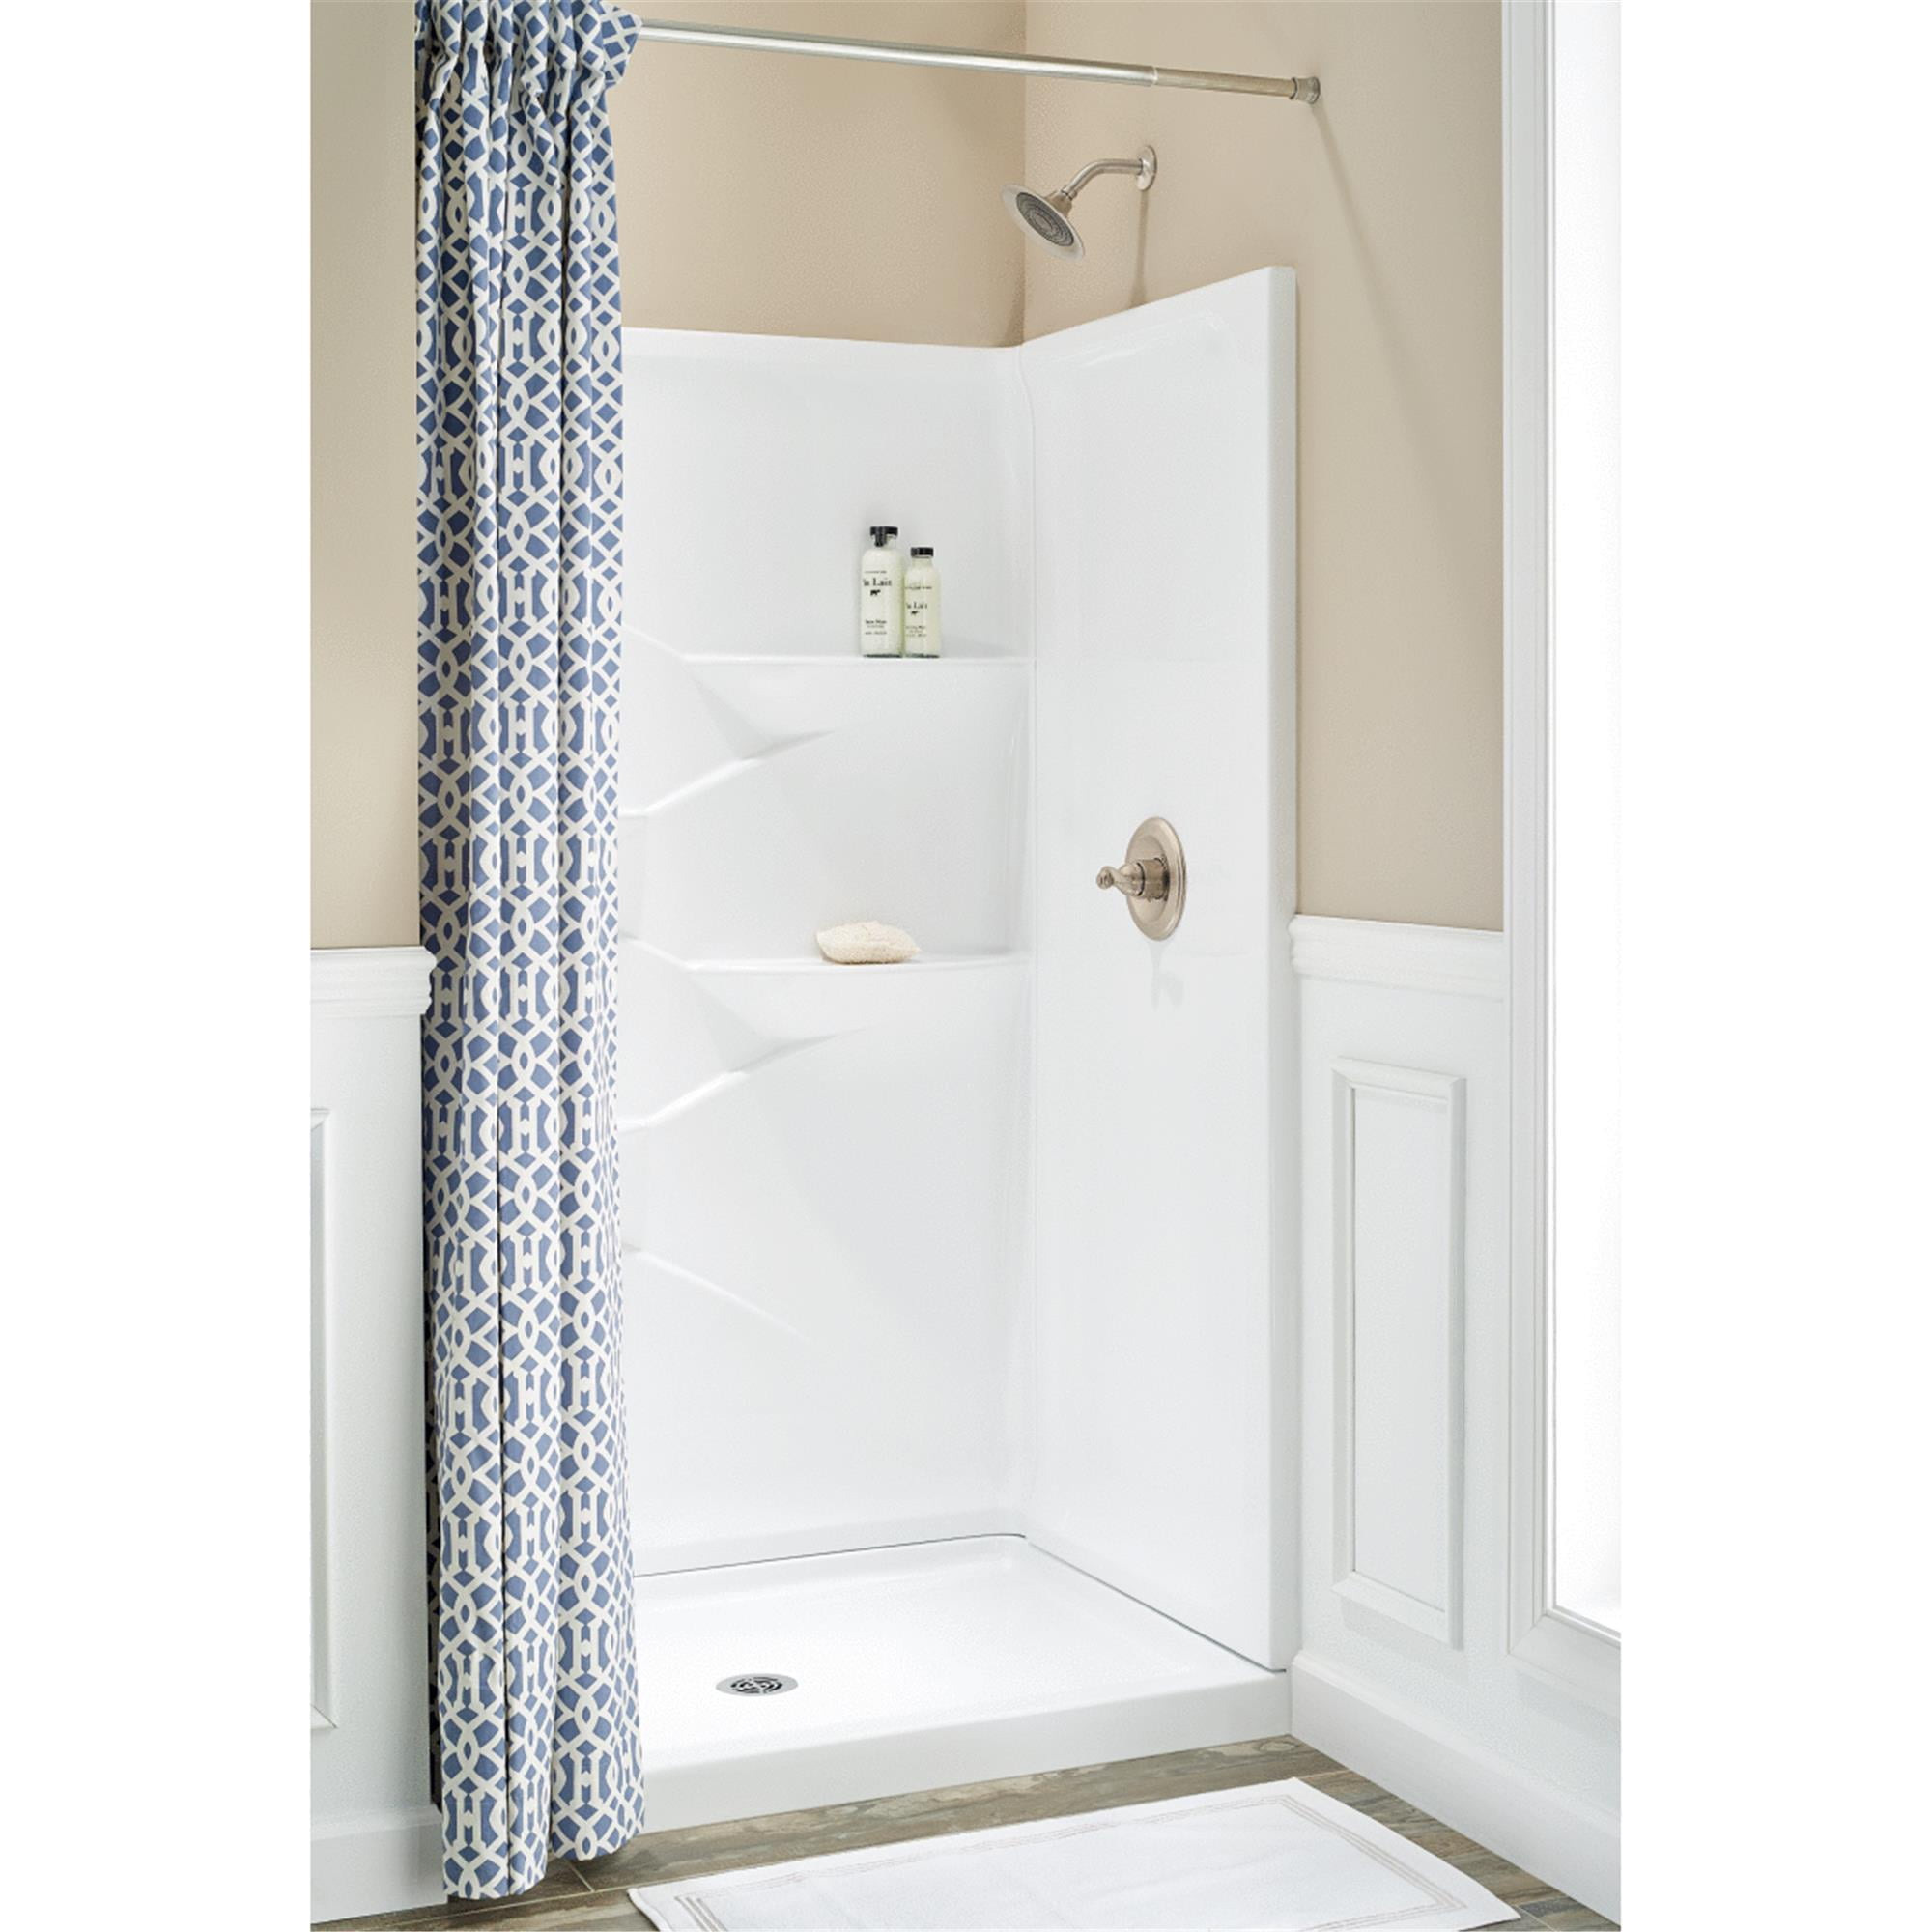 Delta Laurel Shower Wall Set Com, Delta Laurel High Gloss White Acrylic Bathtub Wall Surround